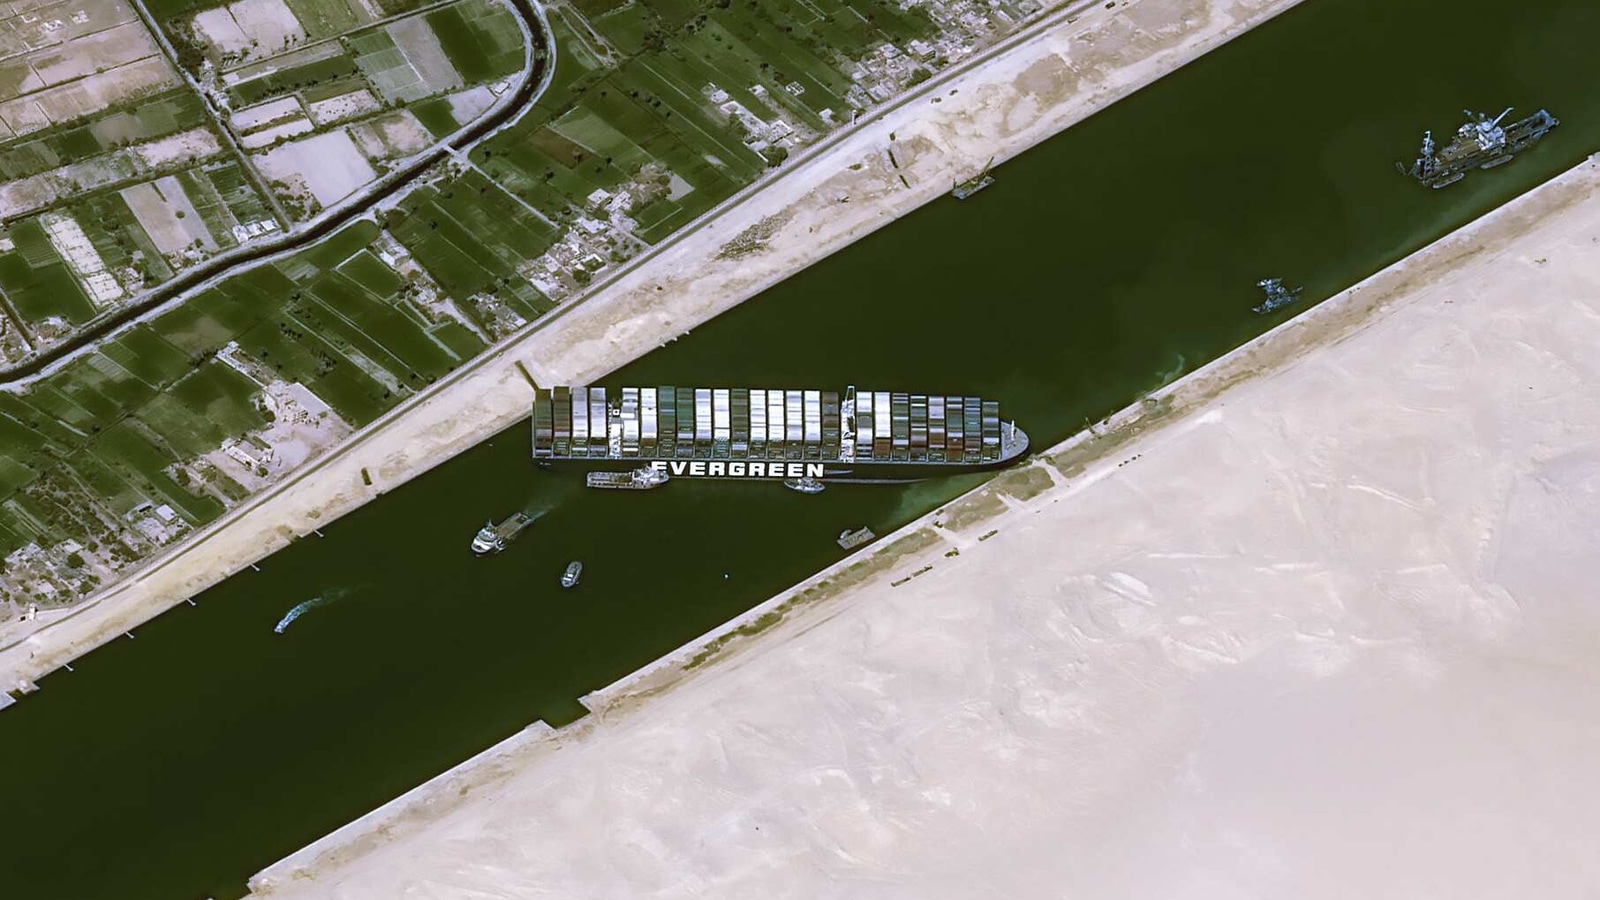 Suez Canal, China, Russia